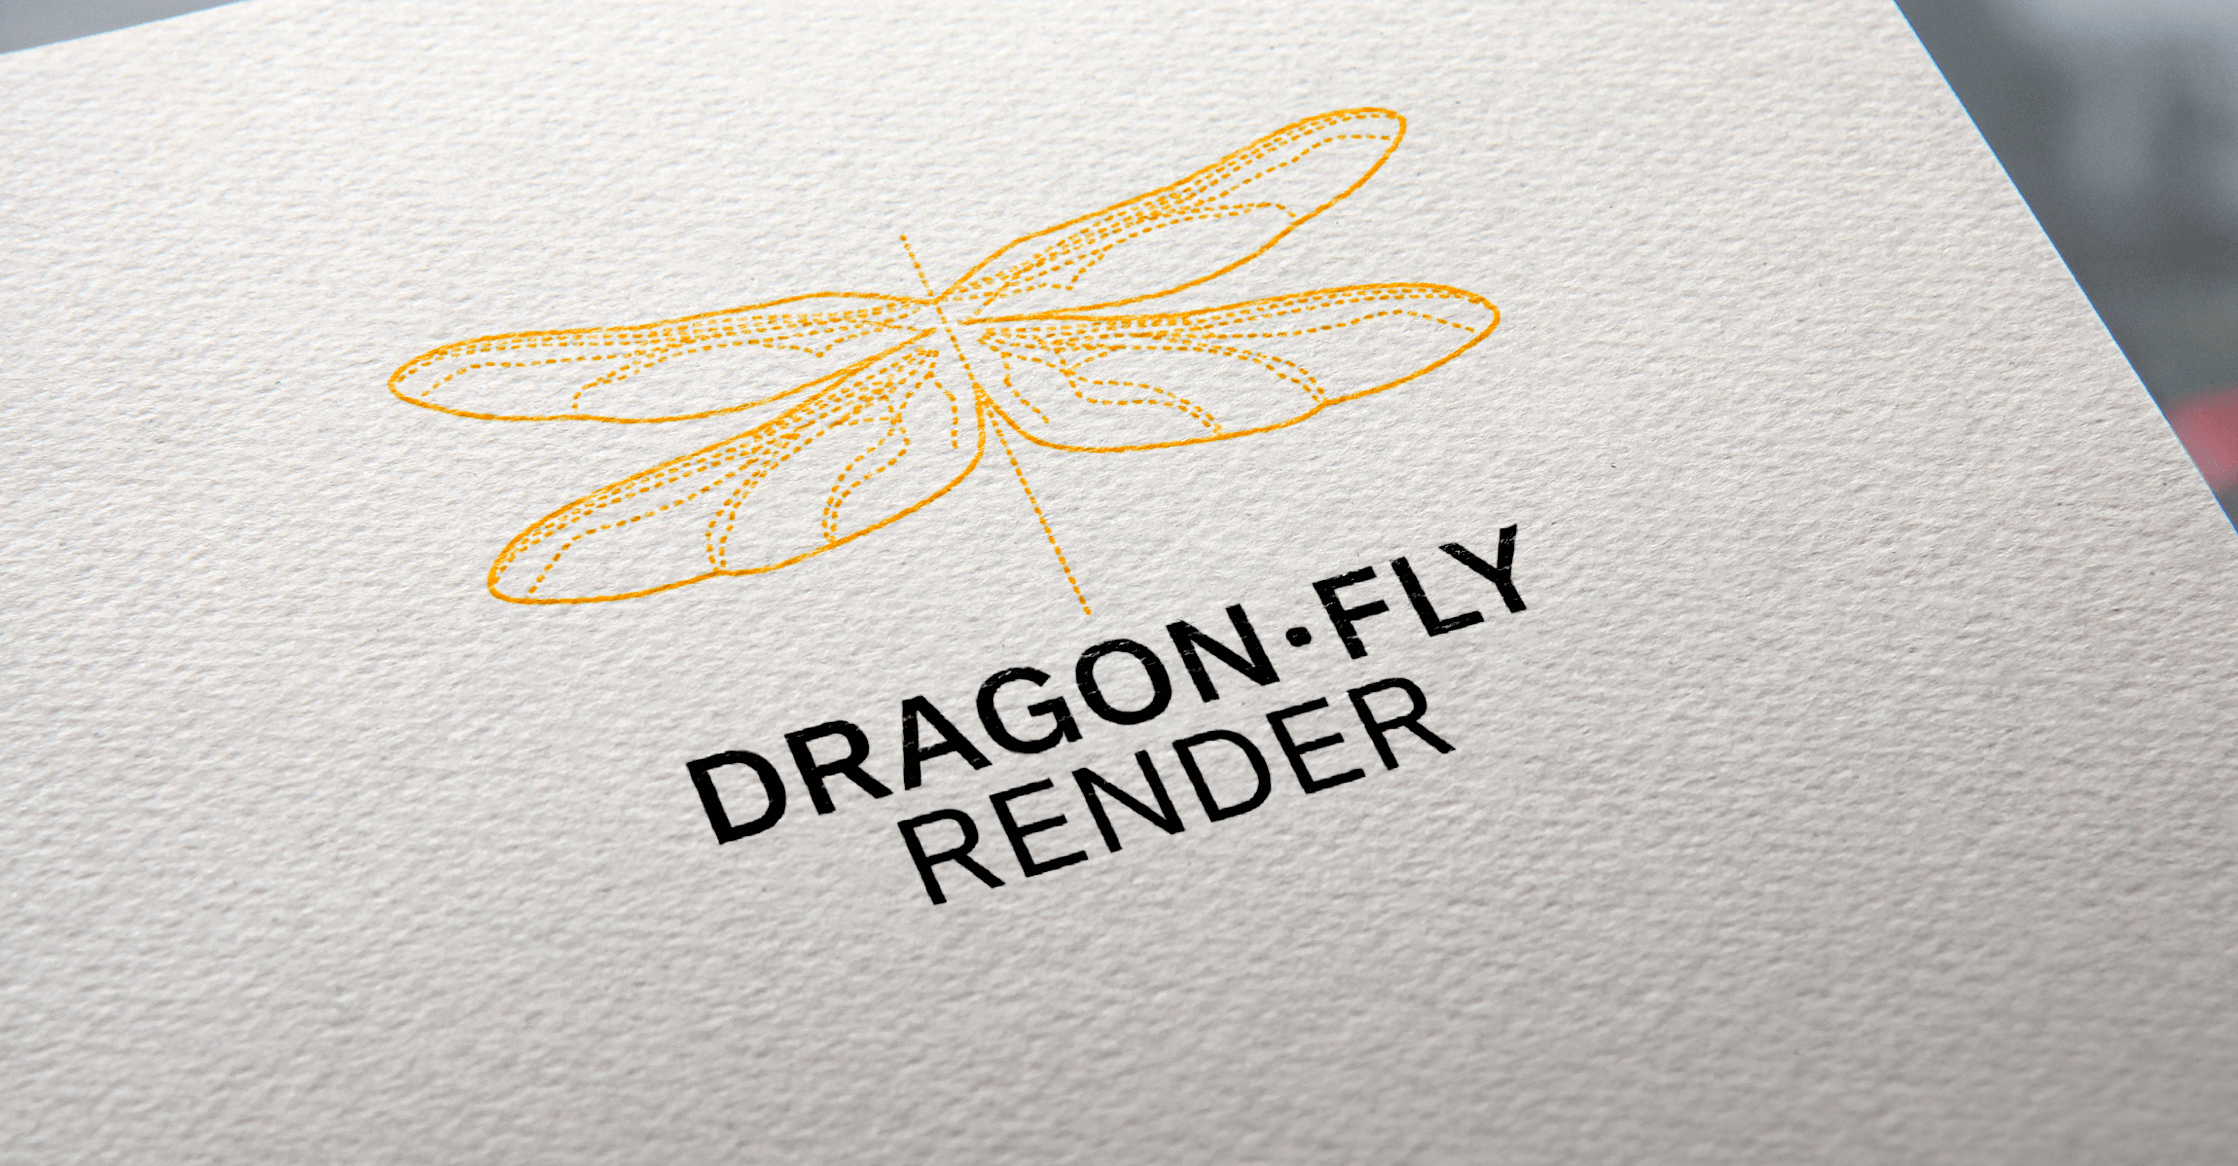 Dragon-fly Render, logotipo | Ideamatic